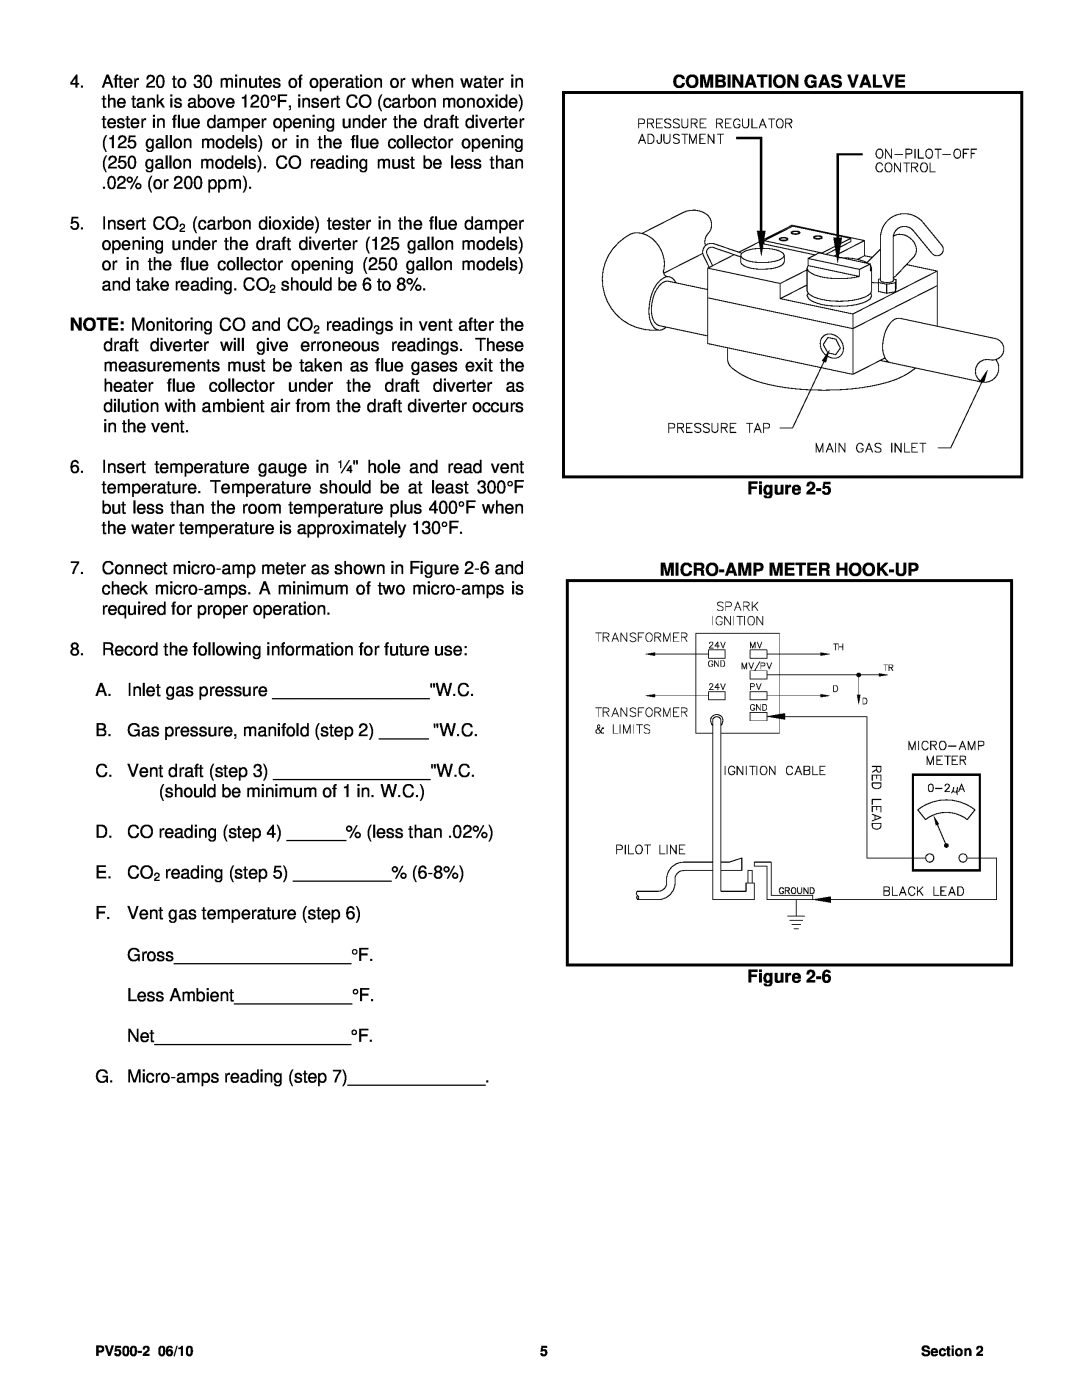 PVI Industries PV500-2 manual Combination Gas Valve, Micro-Ampmeter Hook-Up 